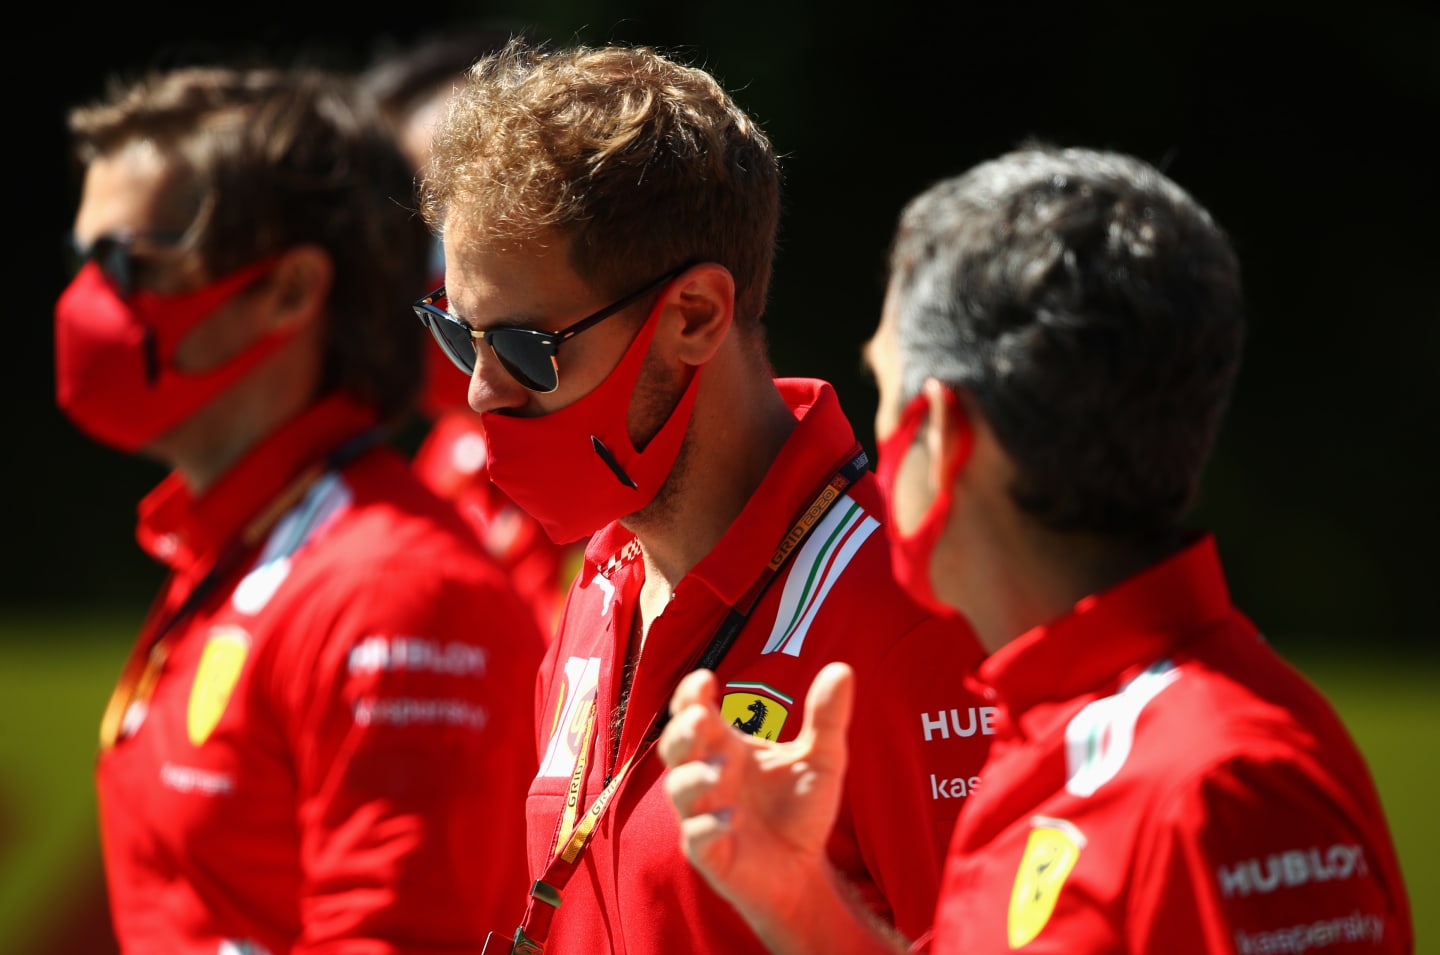 SPIELBERG, AUSTRIA - JULY 02: Sebastian Vettel of Germany and Ferrari walks the track with